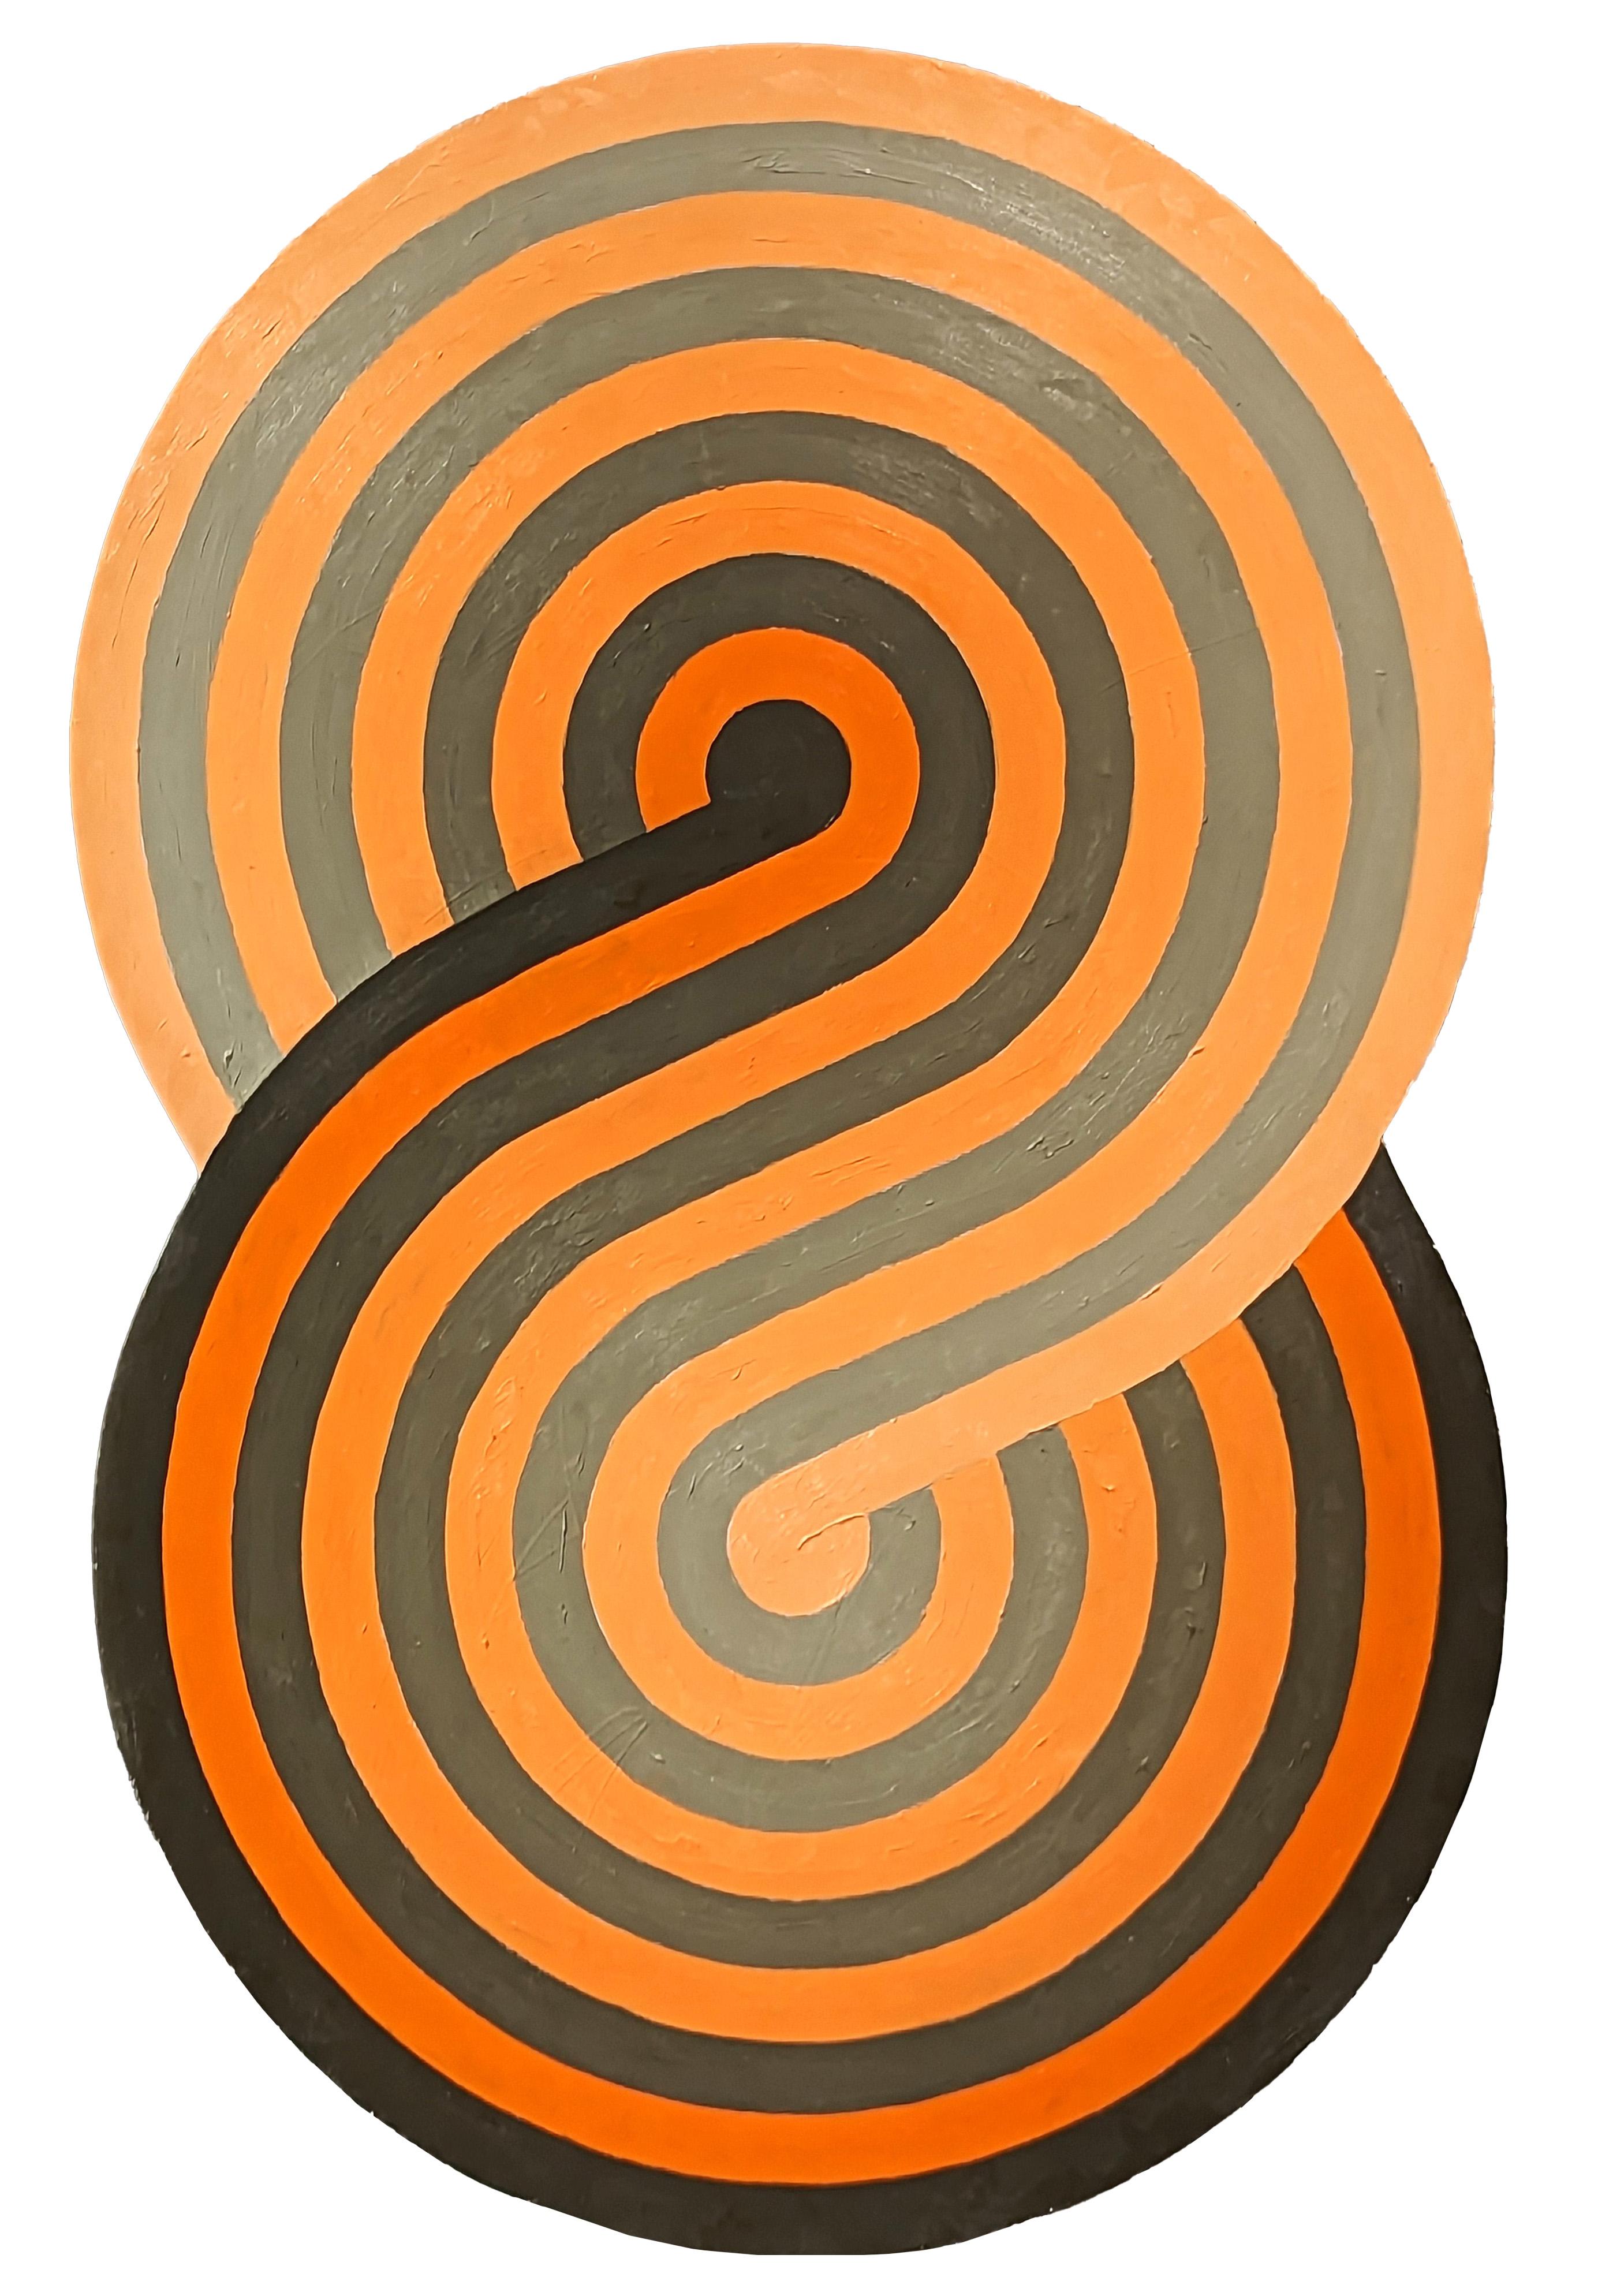 "Ohio" Contemporary Abstract Orange & Gray Concentric Circle Shaped Painting - Mixed Media Art by David Hardaker